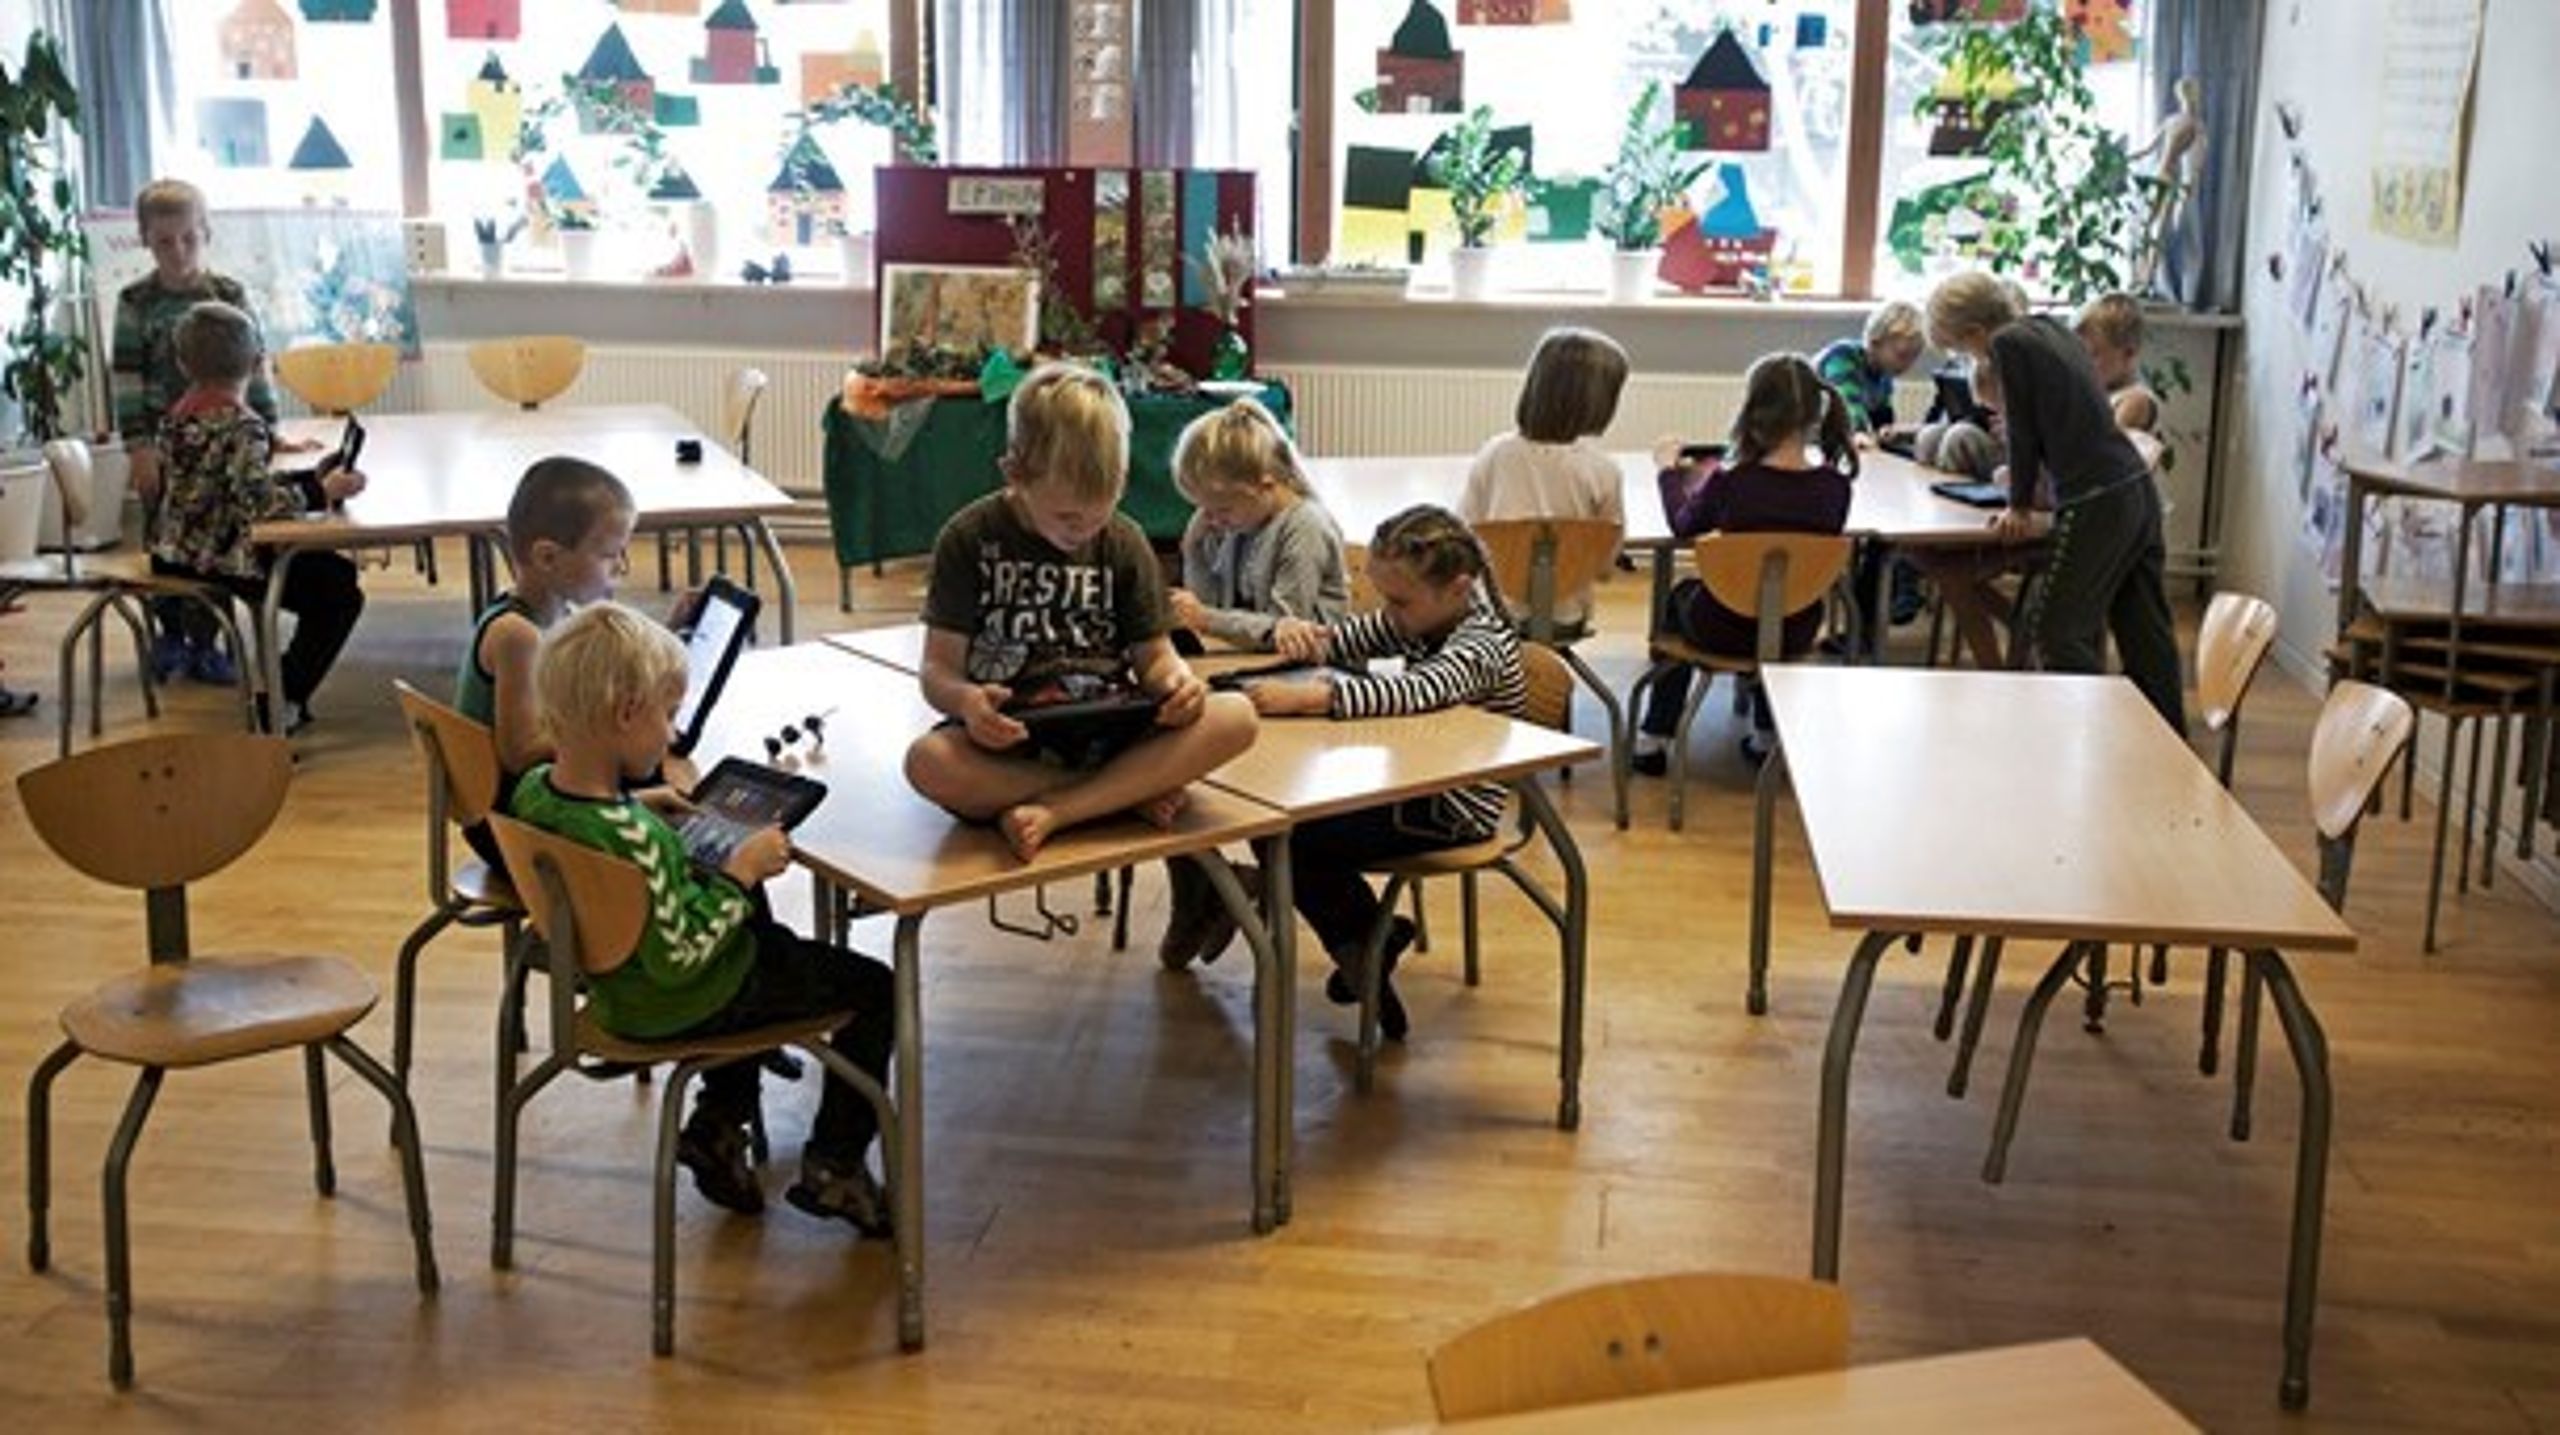 SFO'ens praksis og struktur skal være mere toneangivende for skolens organisering, skriver Lars Søgaard Jensen. (Foto:  Jonas Skovbjerg Fogh/Ritzau Scanpix)